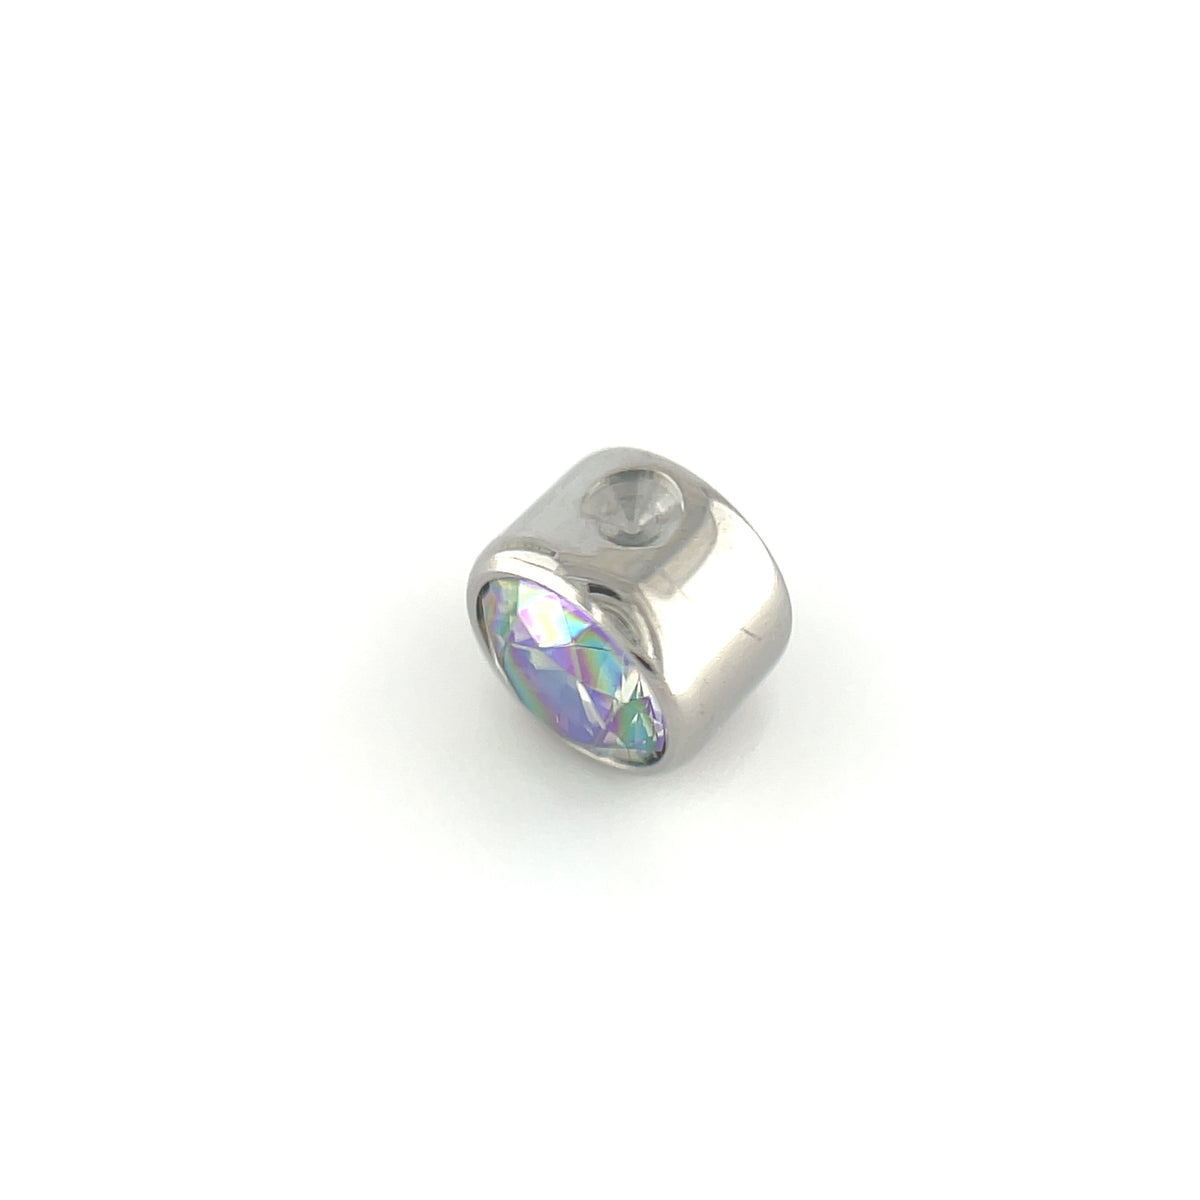 Industrial Strength Titanium Shine CZ Gem Captive Bead Ring